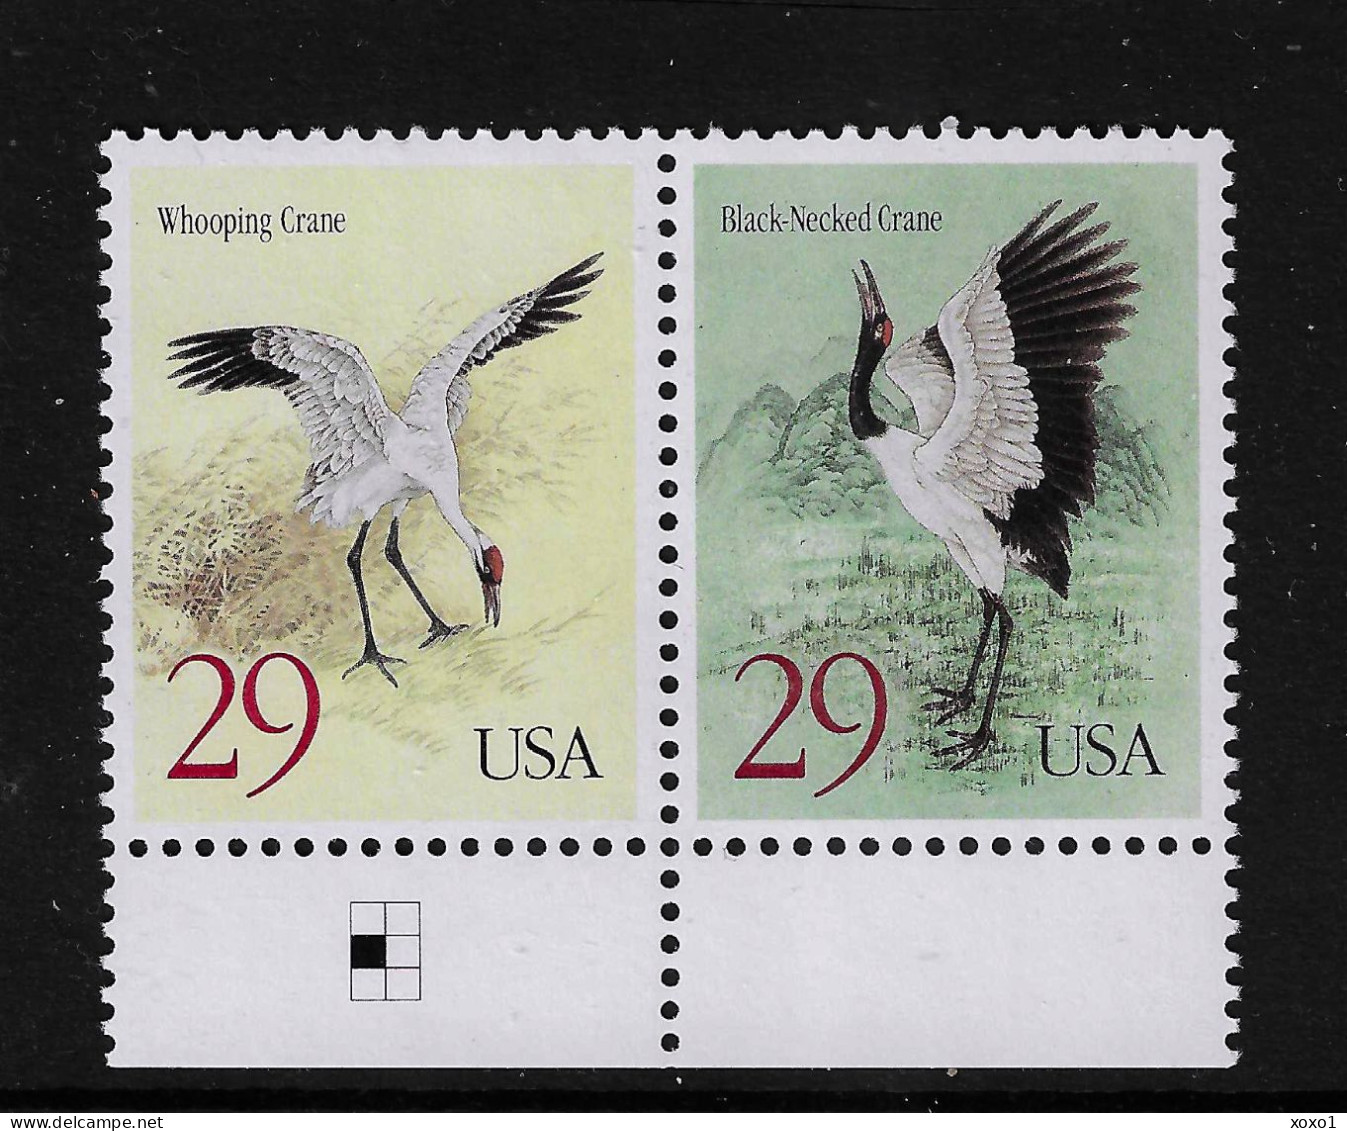 USA 1994 MiNr. 2504 - 2505 Etats-Unis United States Birds Black-necked Crane, Whooping Crane 2v MNH **  2,20 € - Kranichvögel